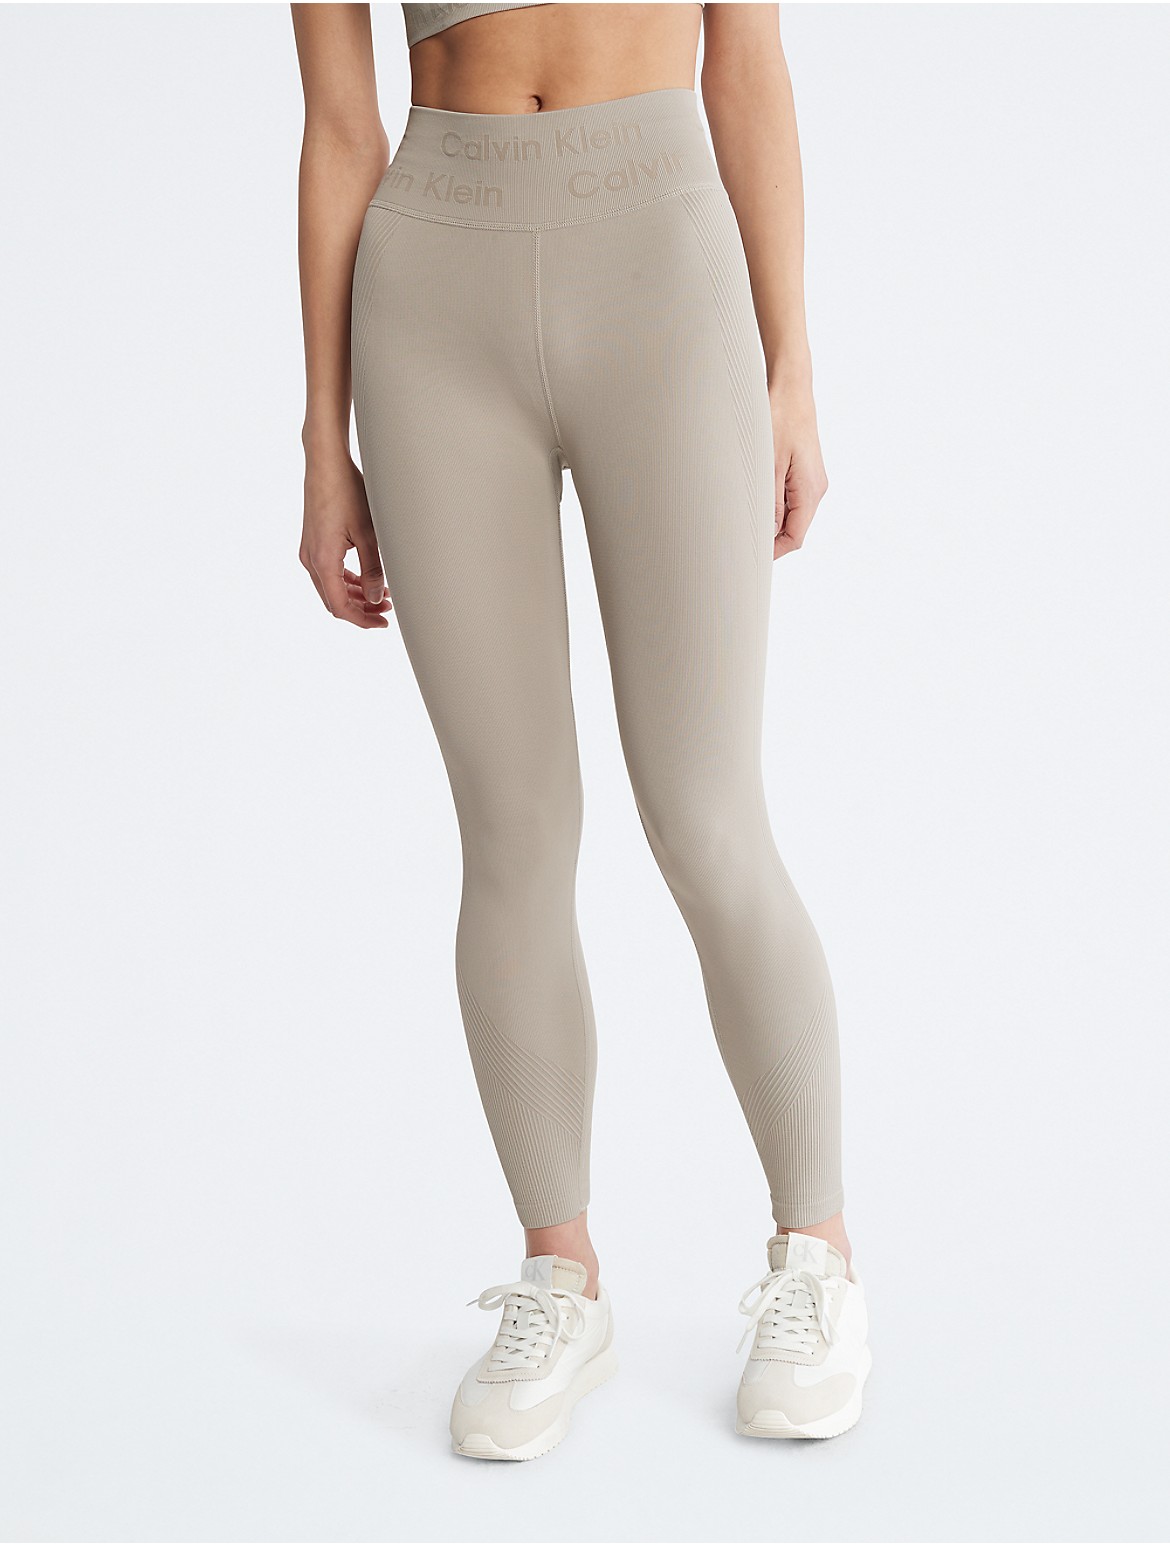 Calvin Klein Women's Performance Seamless 7/8 Leggings - Brown - XL